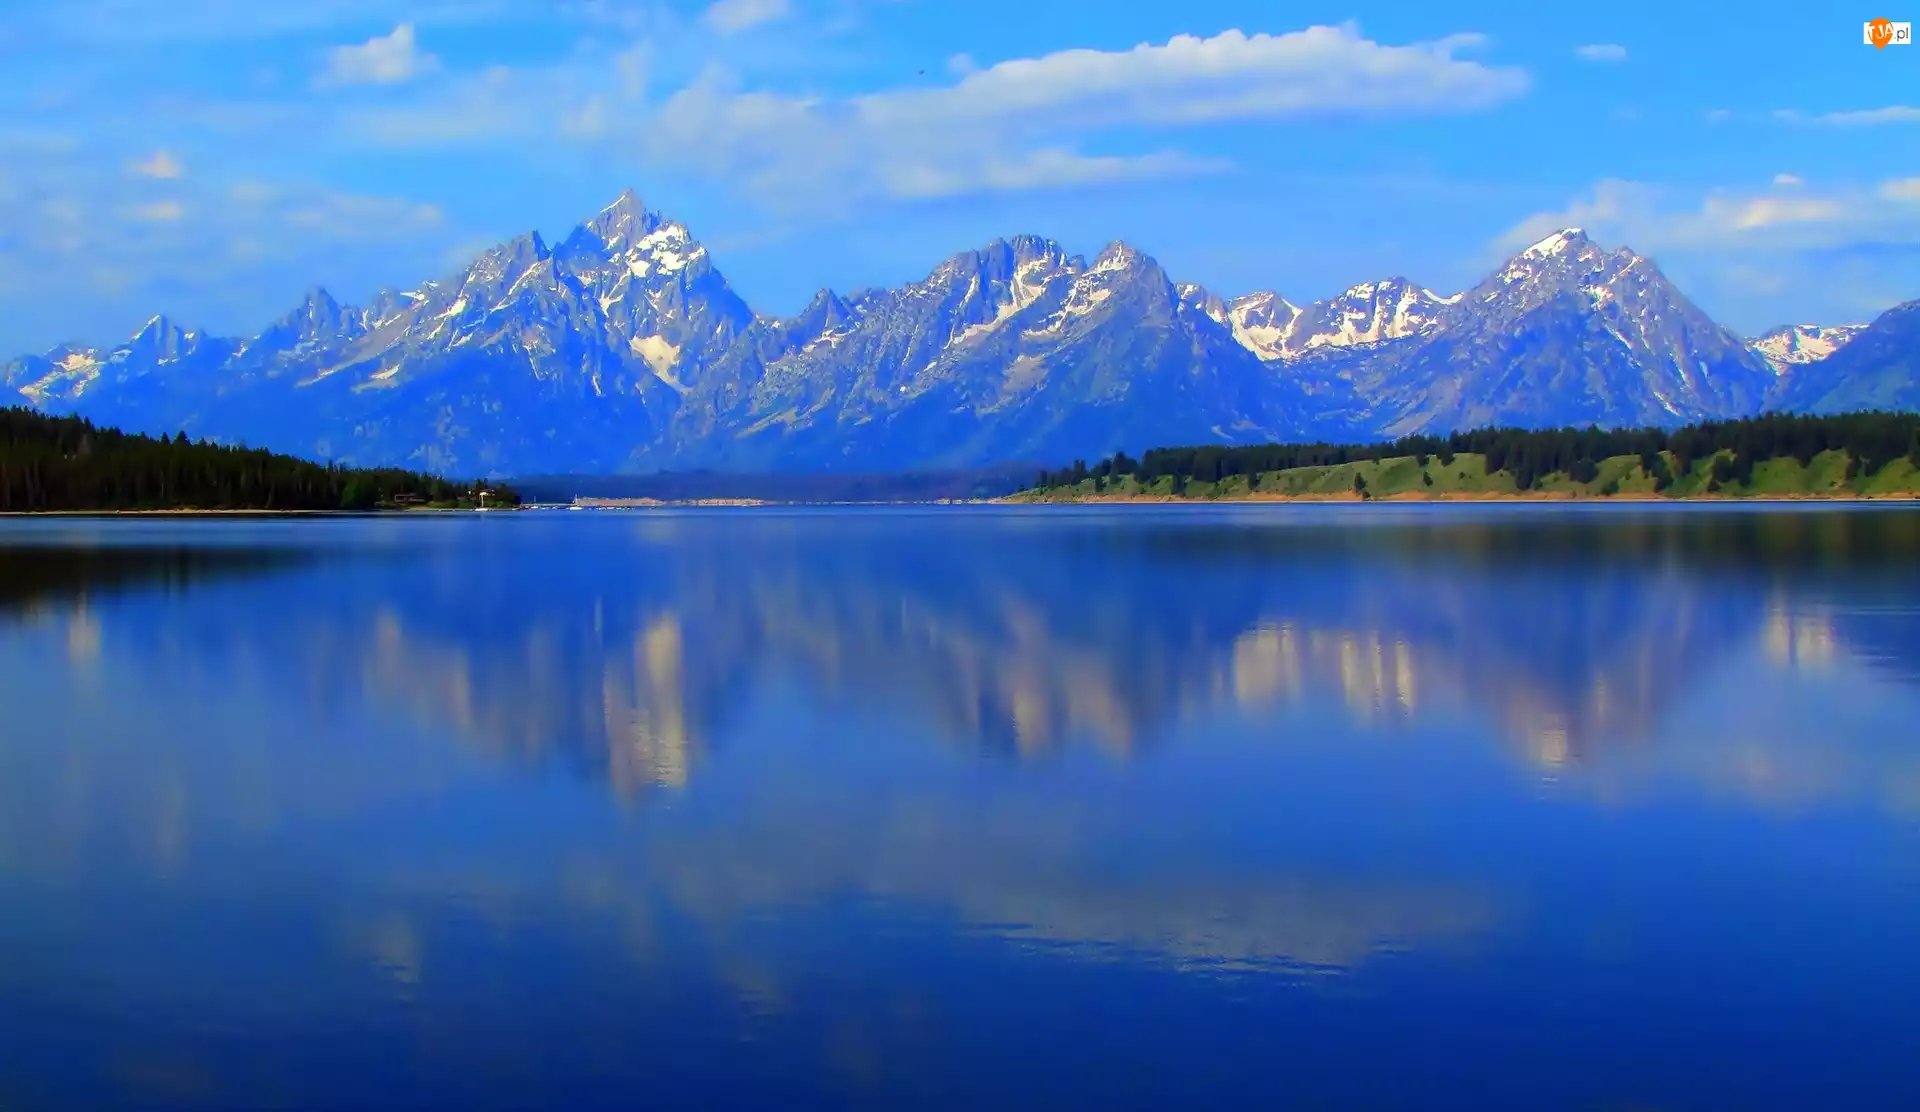 Park Narodowy Grand Teton, Jezioro Jackson Lake, Stan Wyoming, Stany Zjednoczone, Góry Teton Range